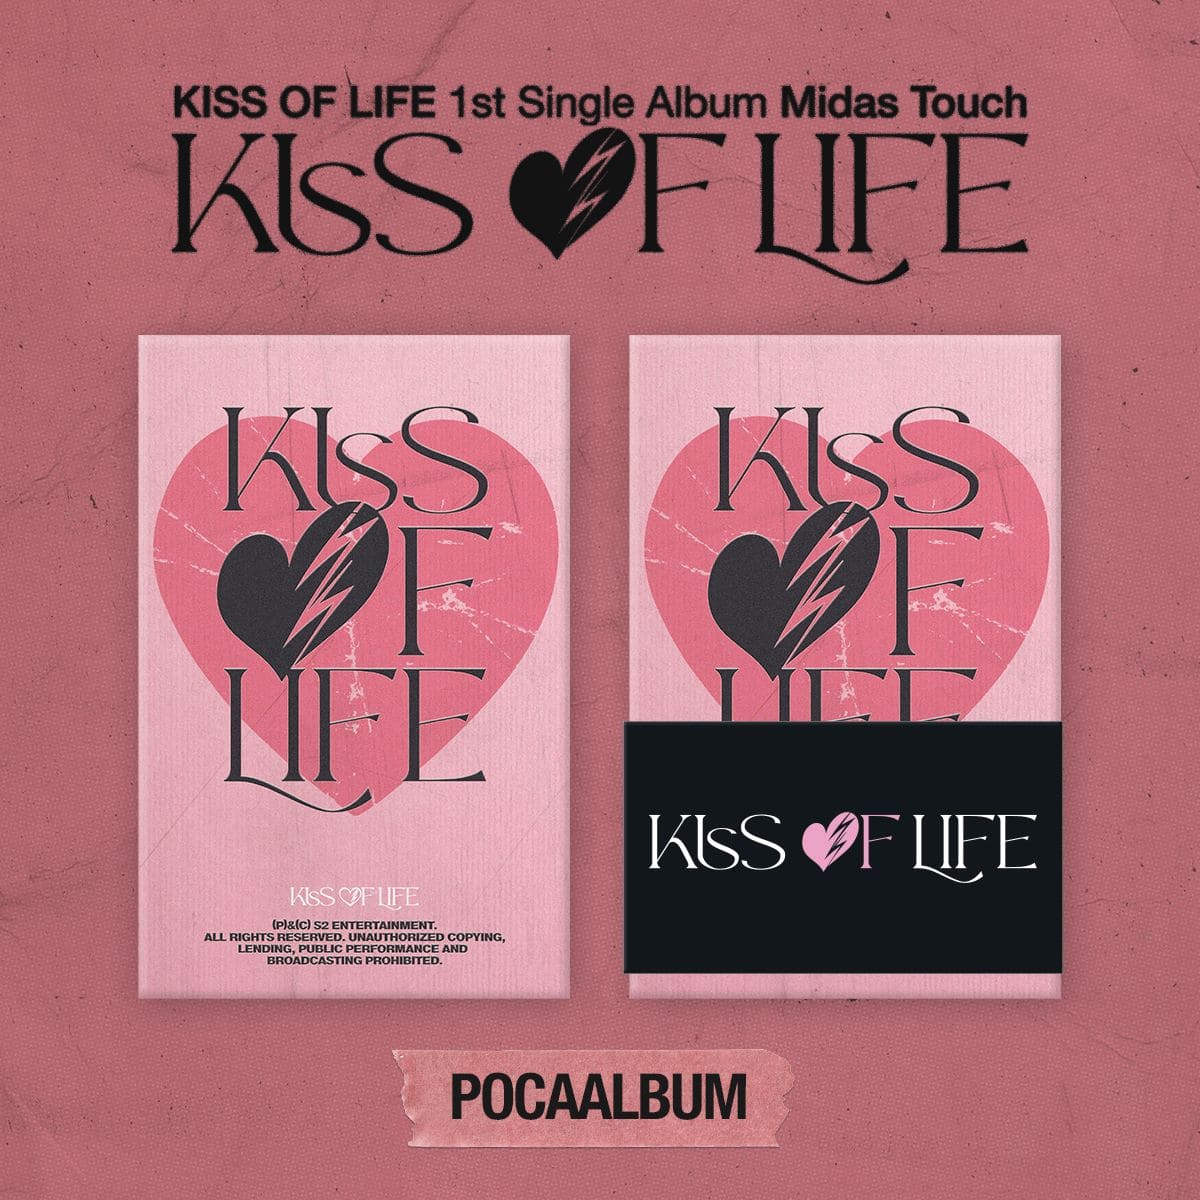 KISS OF LIFE 1st Single Album Midas Touch (POCA ALBUMS Version)